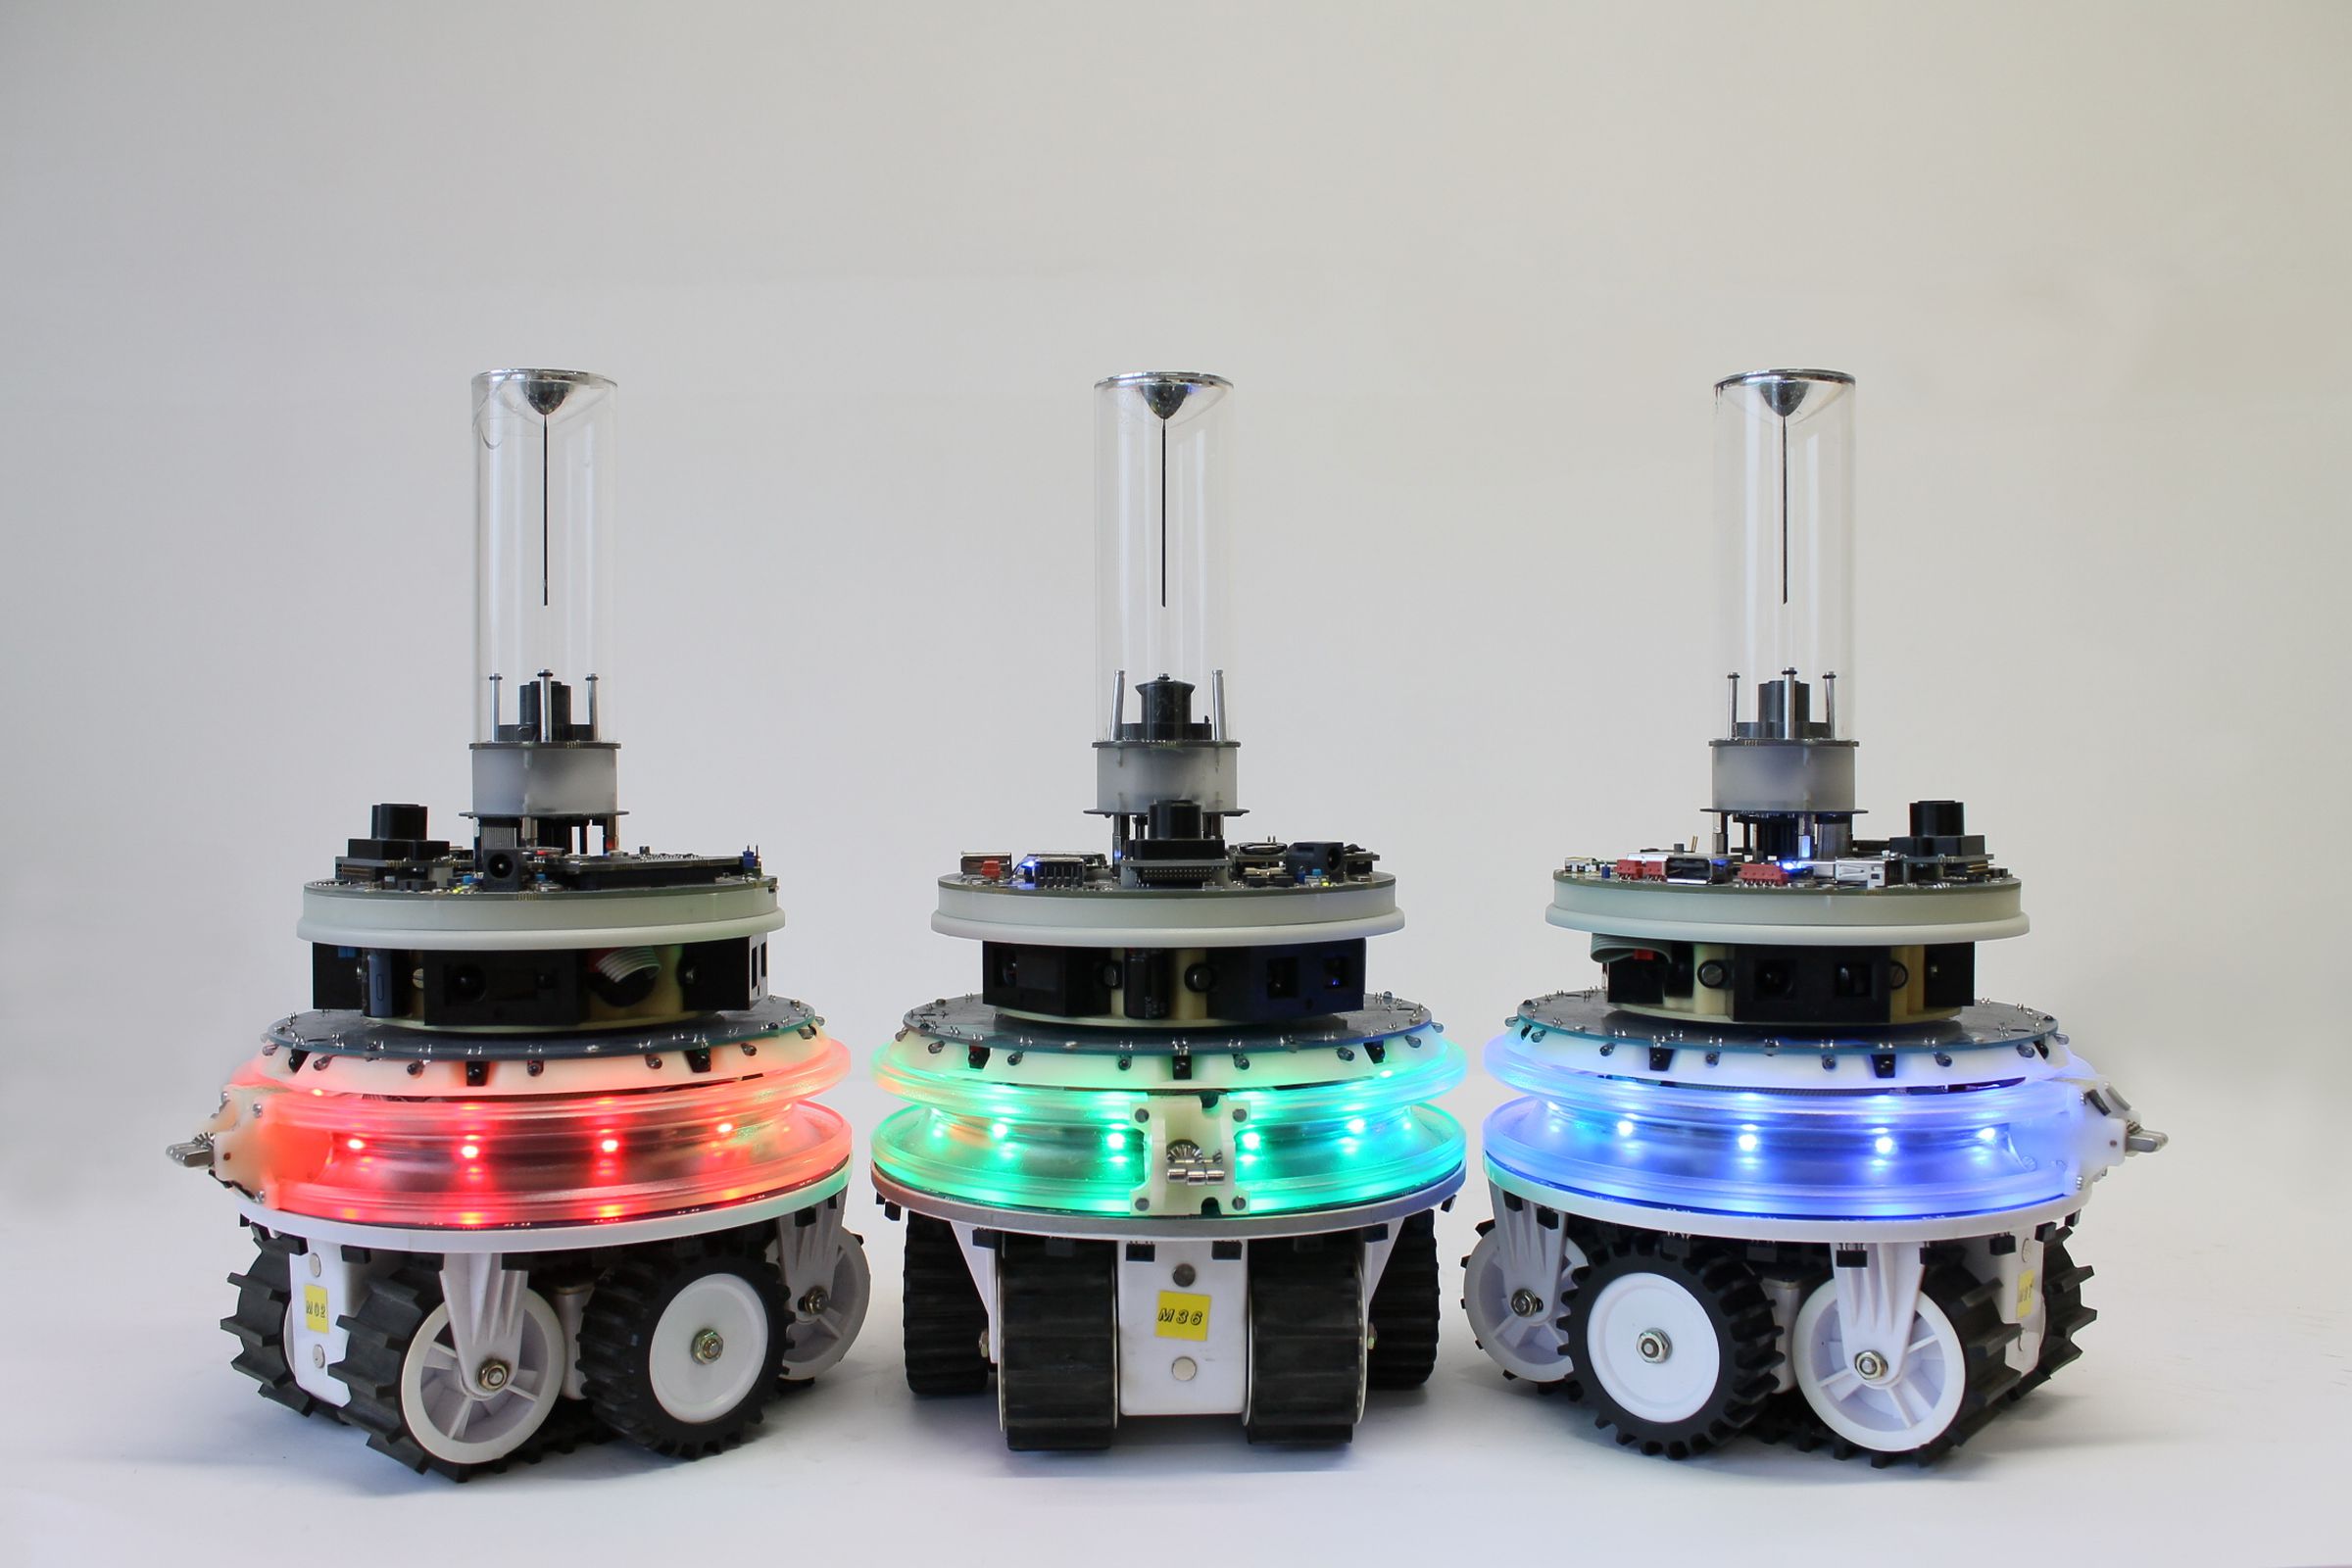 Three autonomous robots with LEDs in different colors.